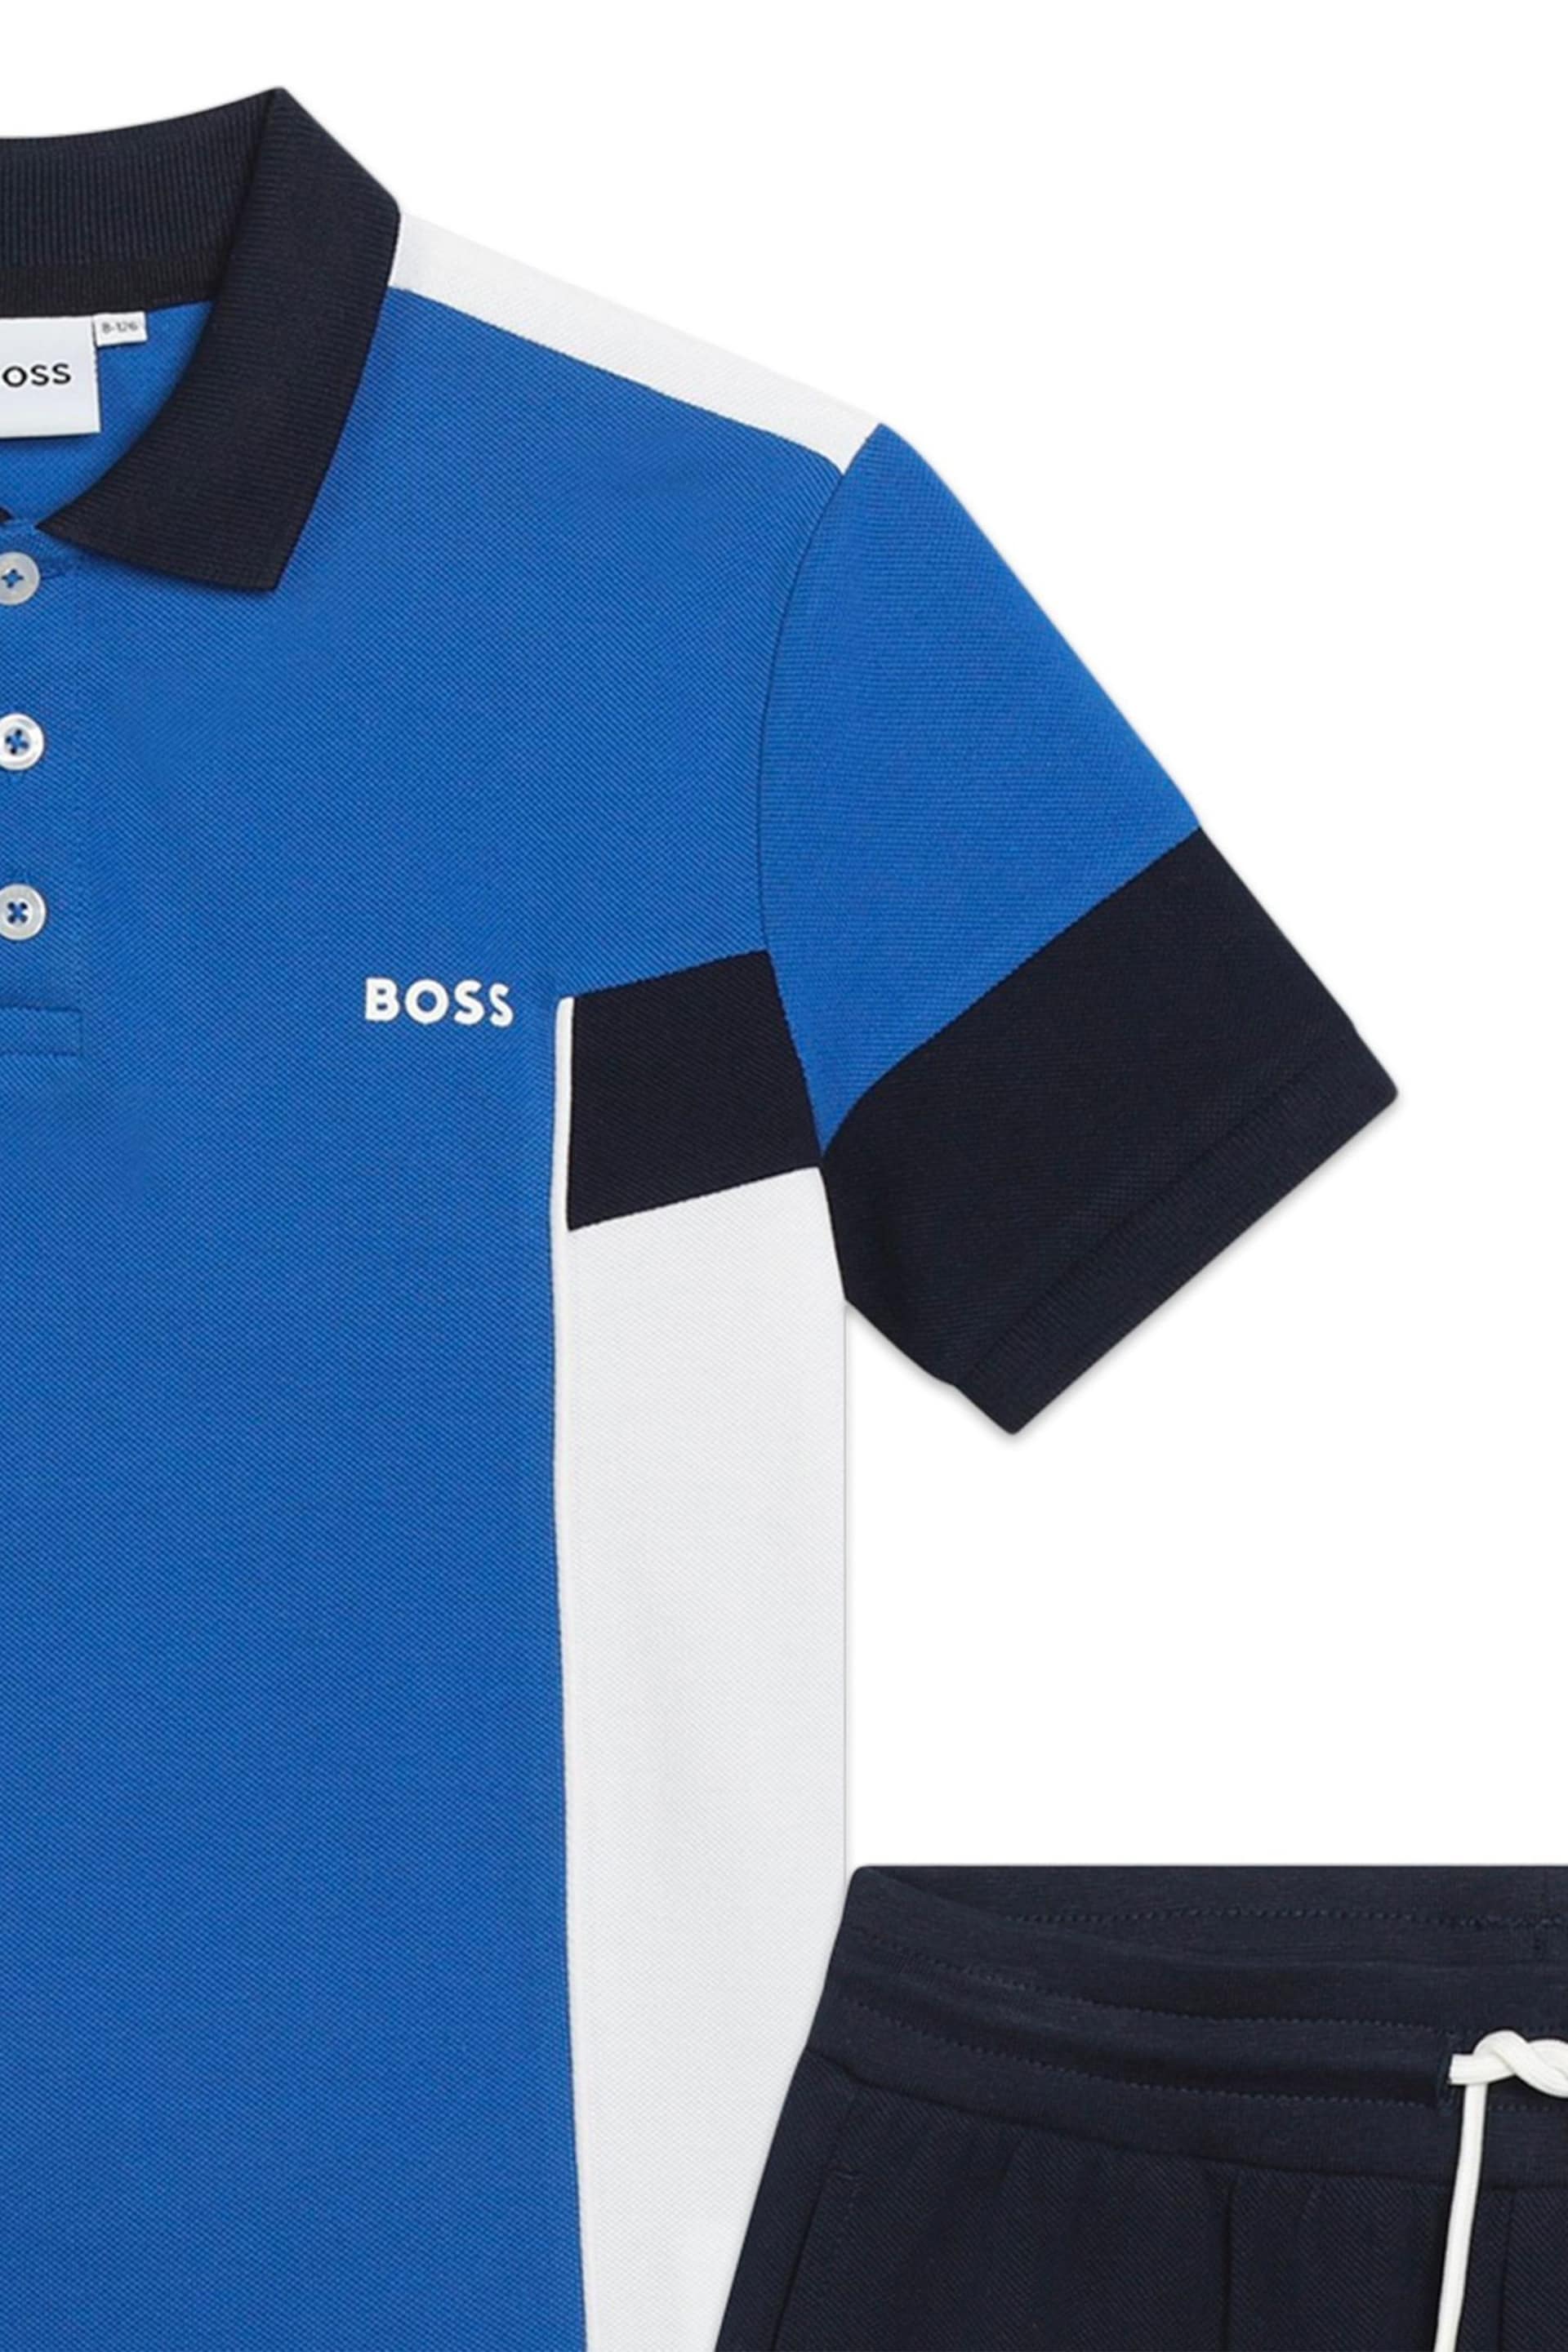 BOSS Blue Colourblock Polo And Shorts Set - Image 7 of 7